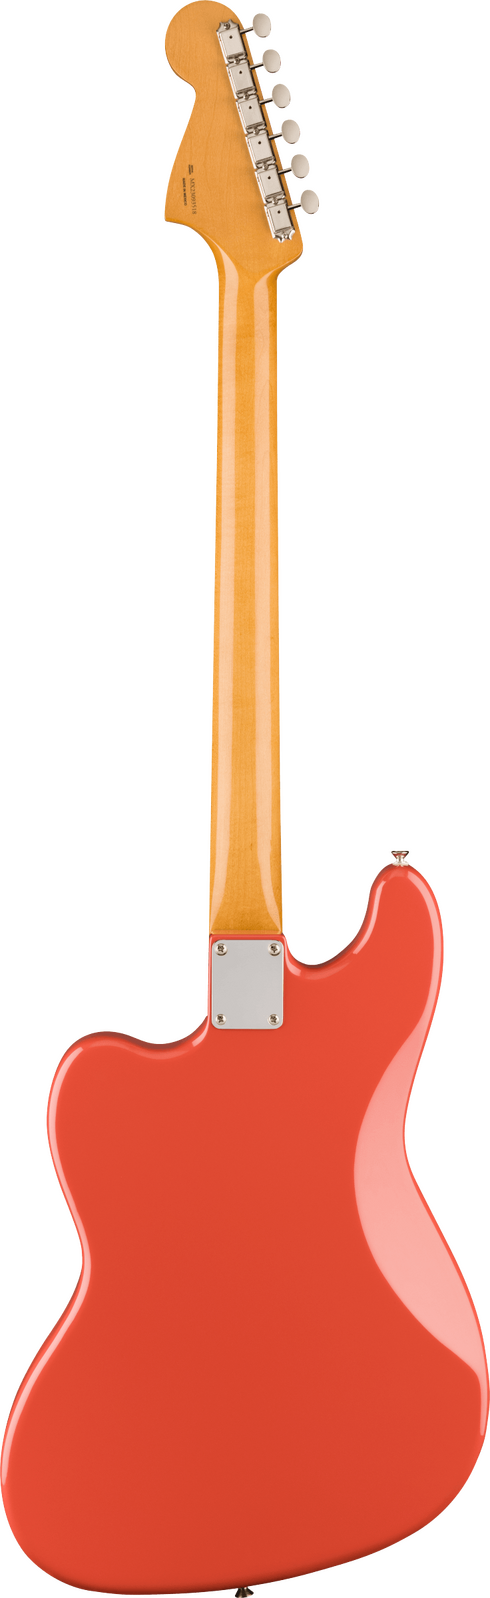 Fender Vintera II '60s Bass VI Fiesta Red